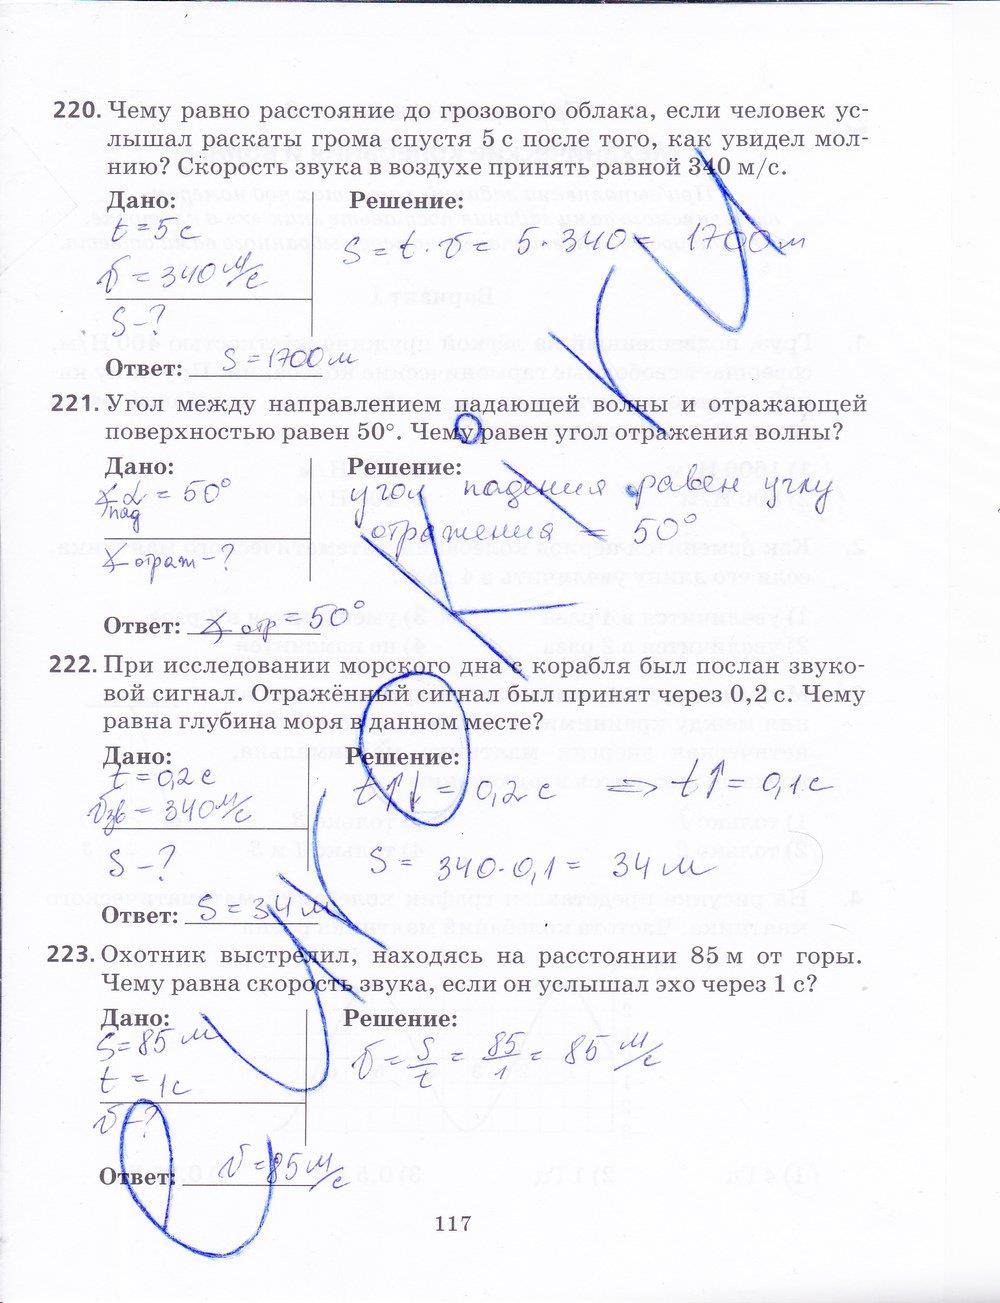 гдз 9 класс рабочая тетрадь страница 117 физика Пурышева, Важеевская, Чаругин